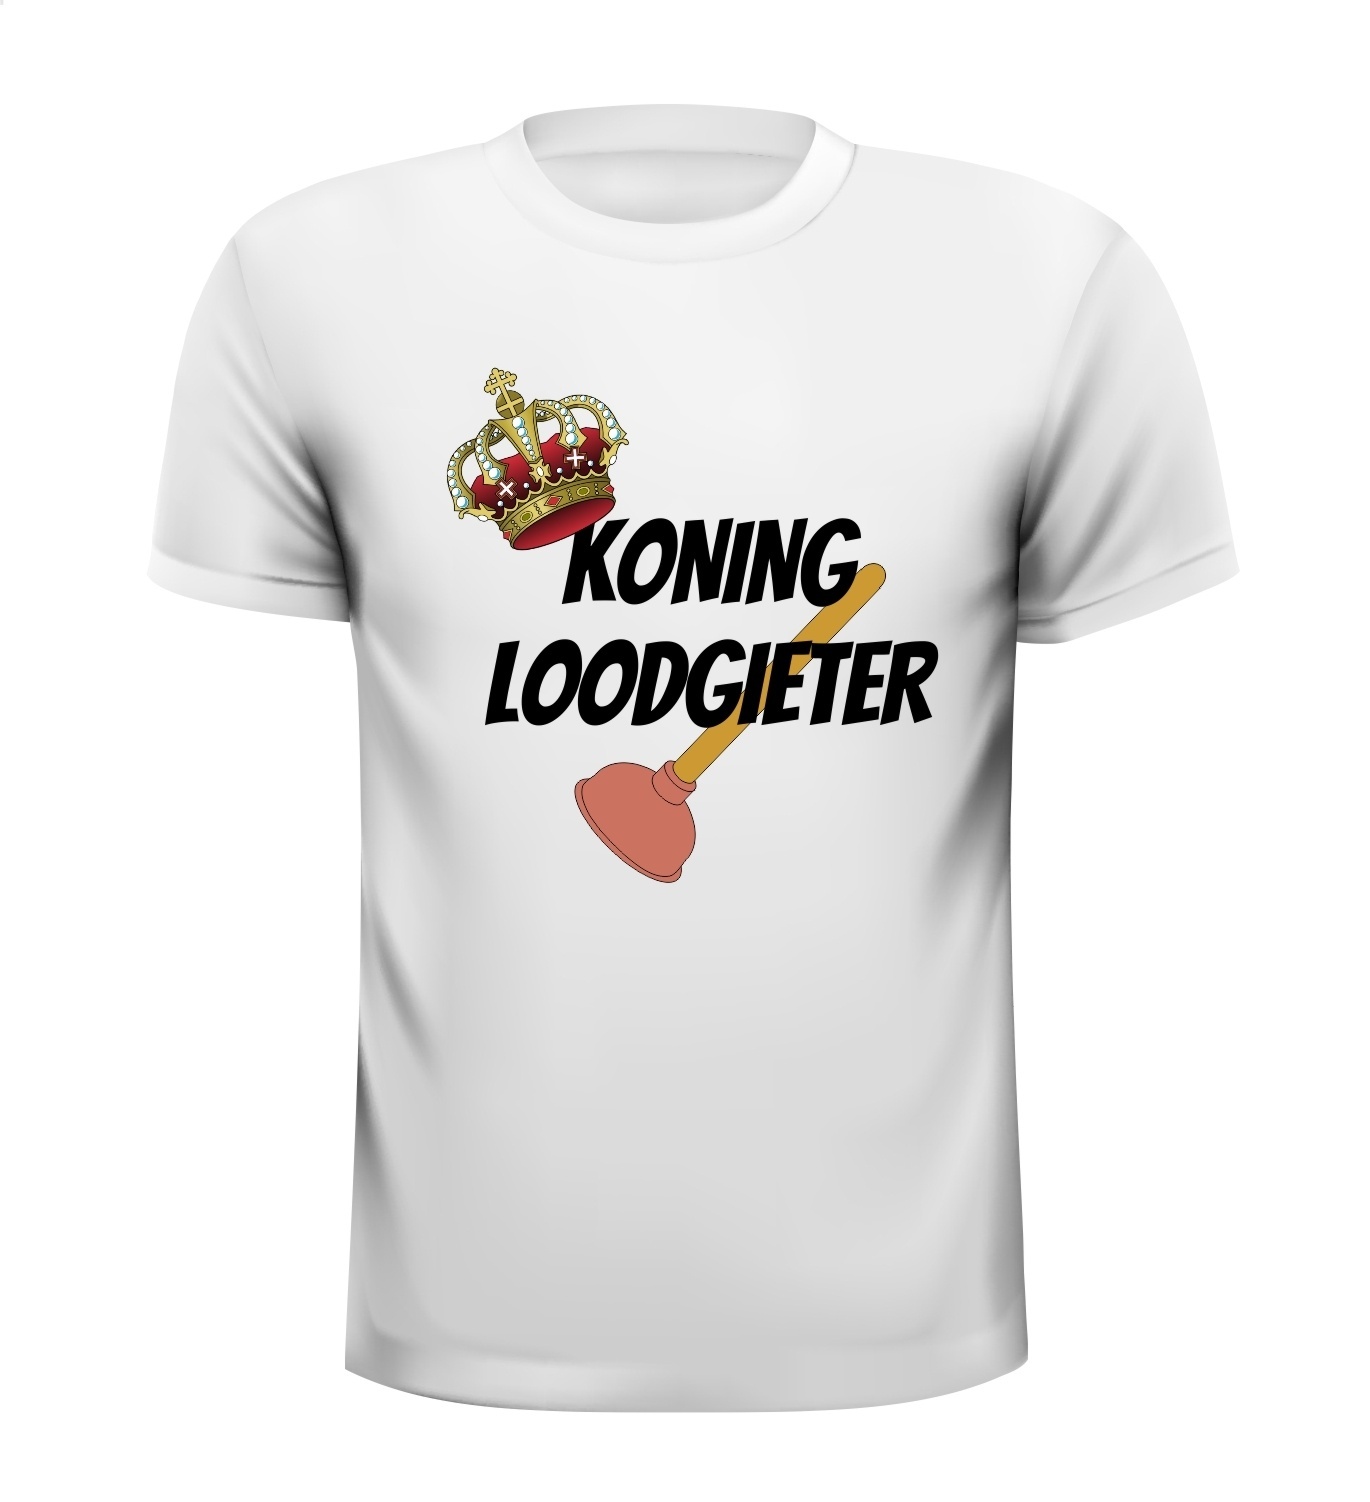 T-shirt Koning loodgieter plopper verstopt toilet grappig